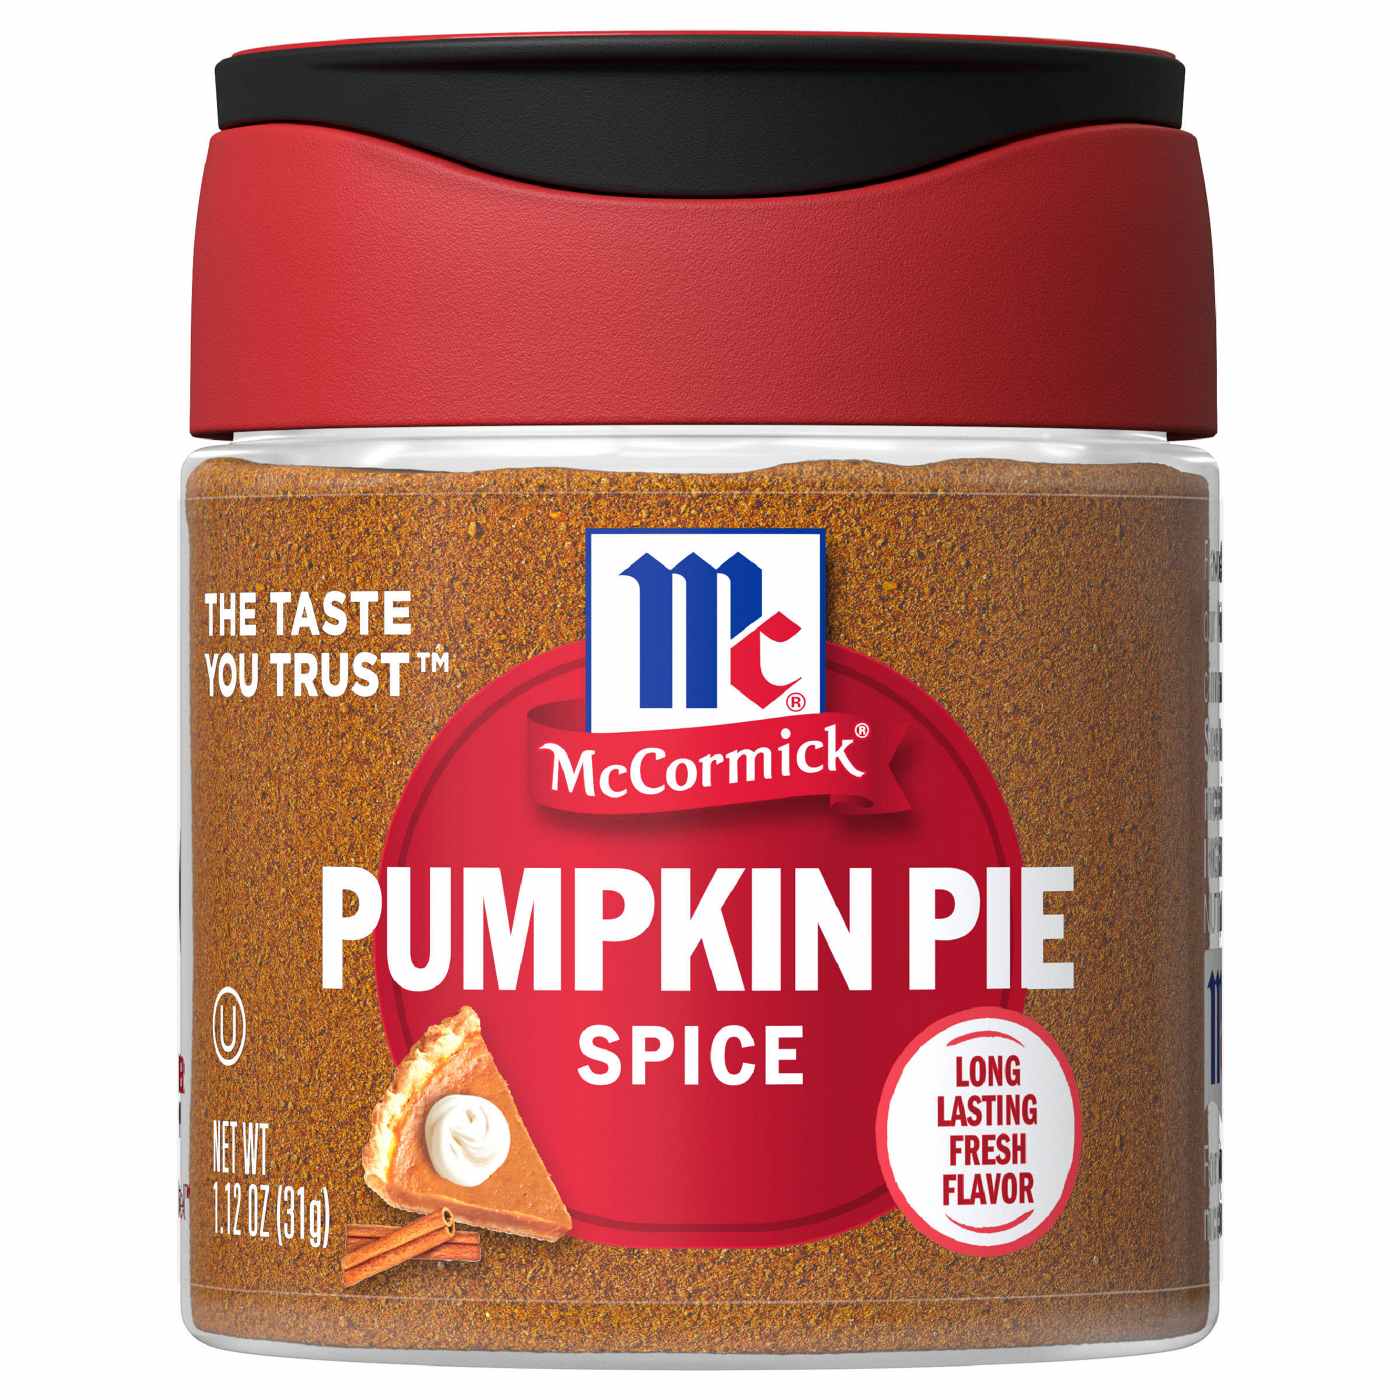 McCormick Pumpkin Pie Spice - Shop Spice Mixes at H-E-B